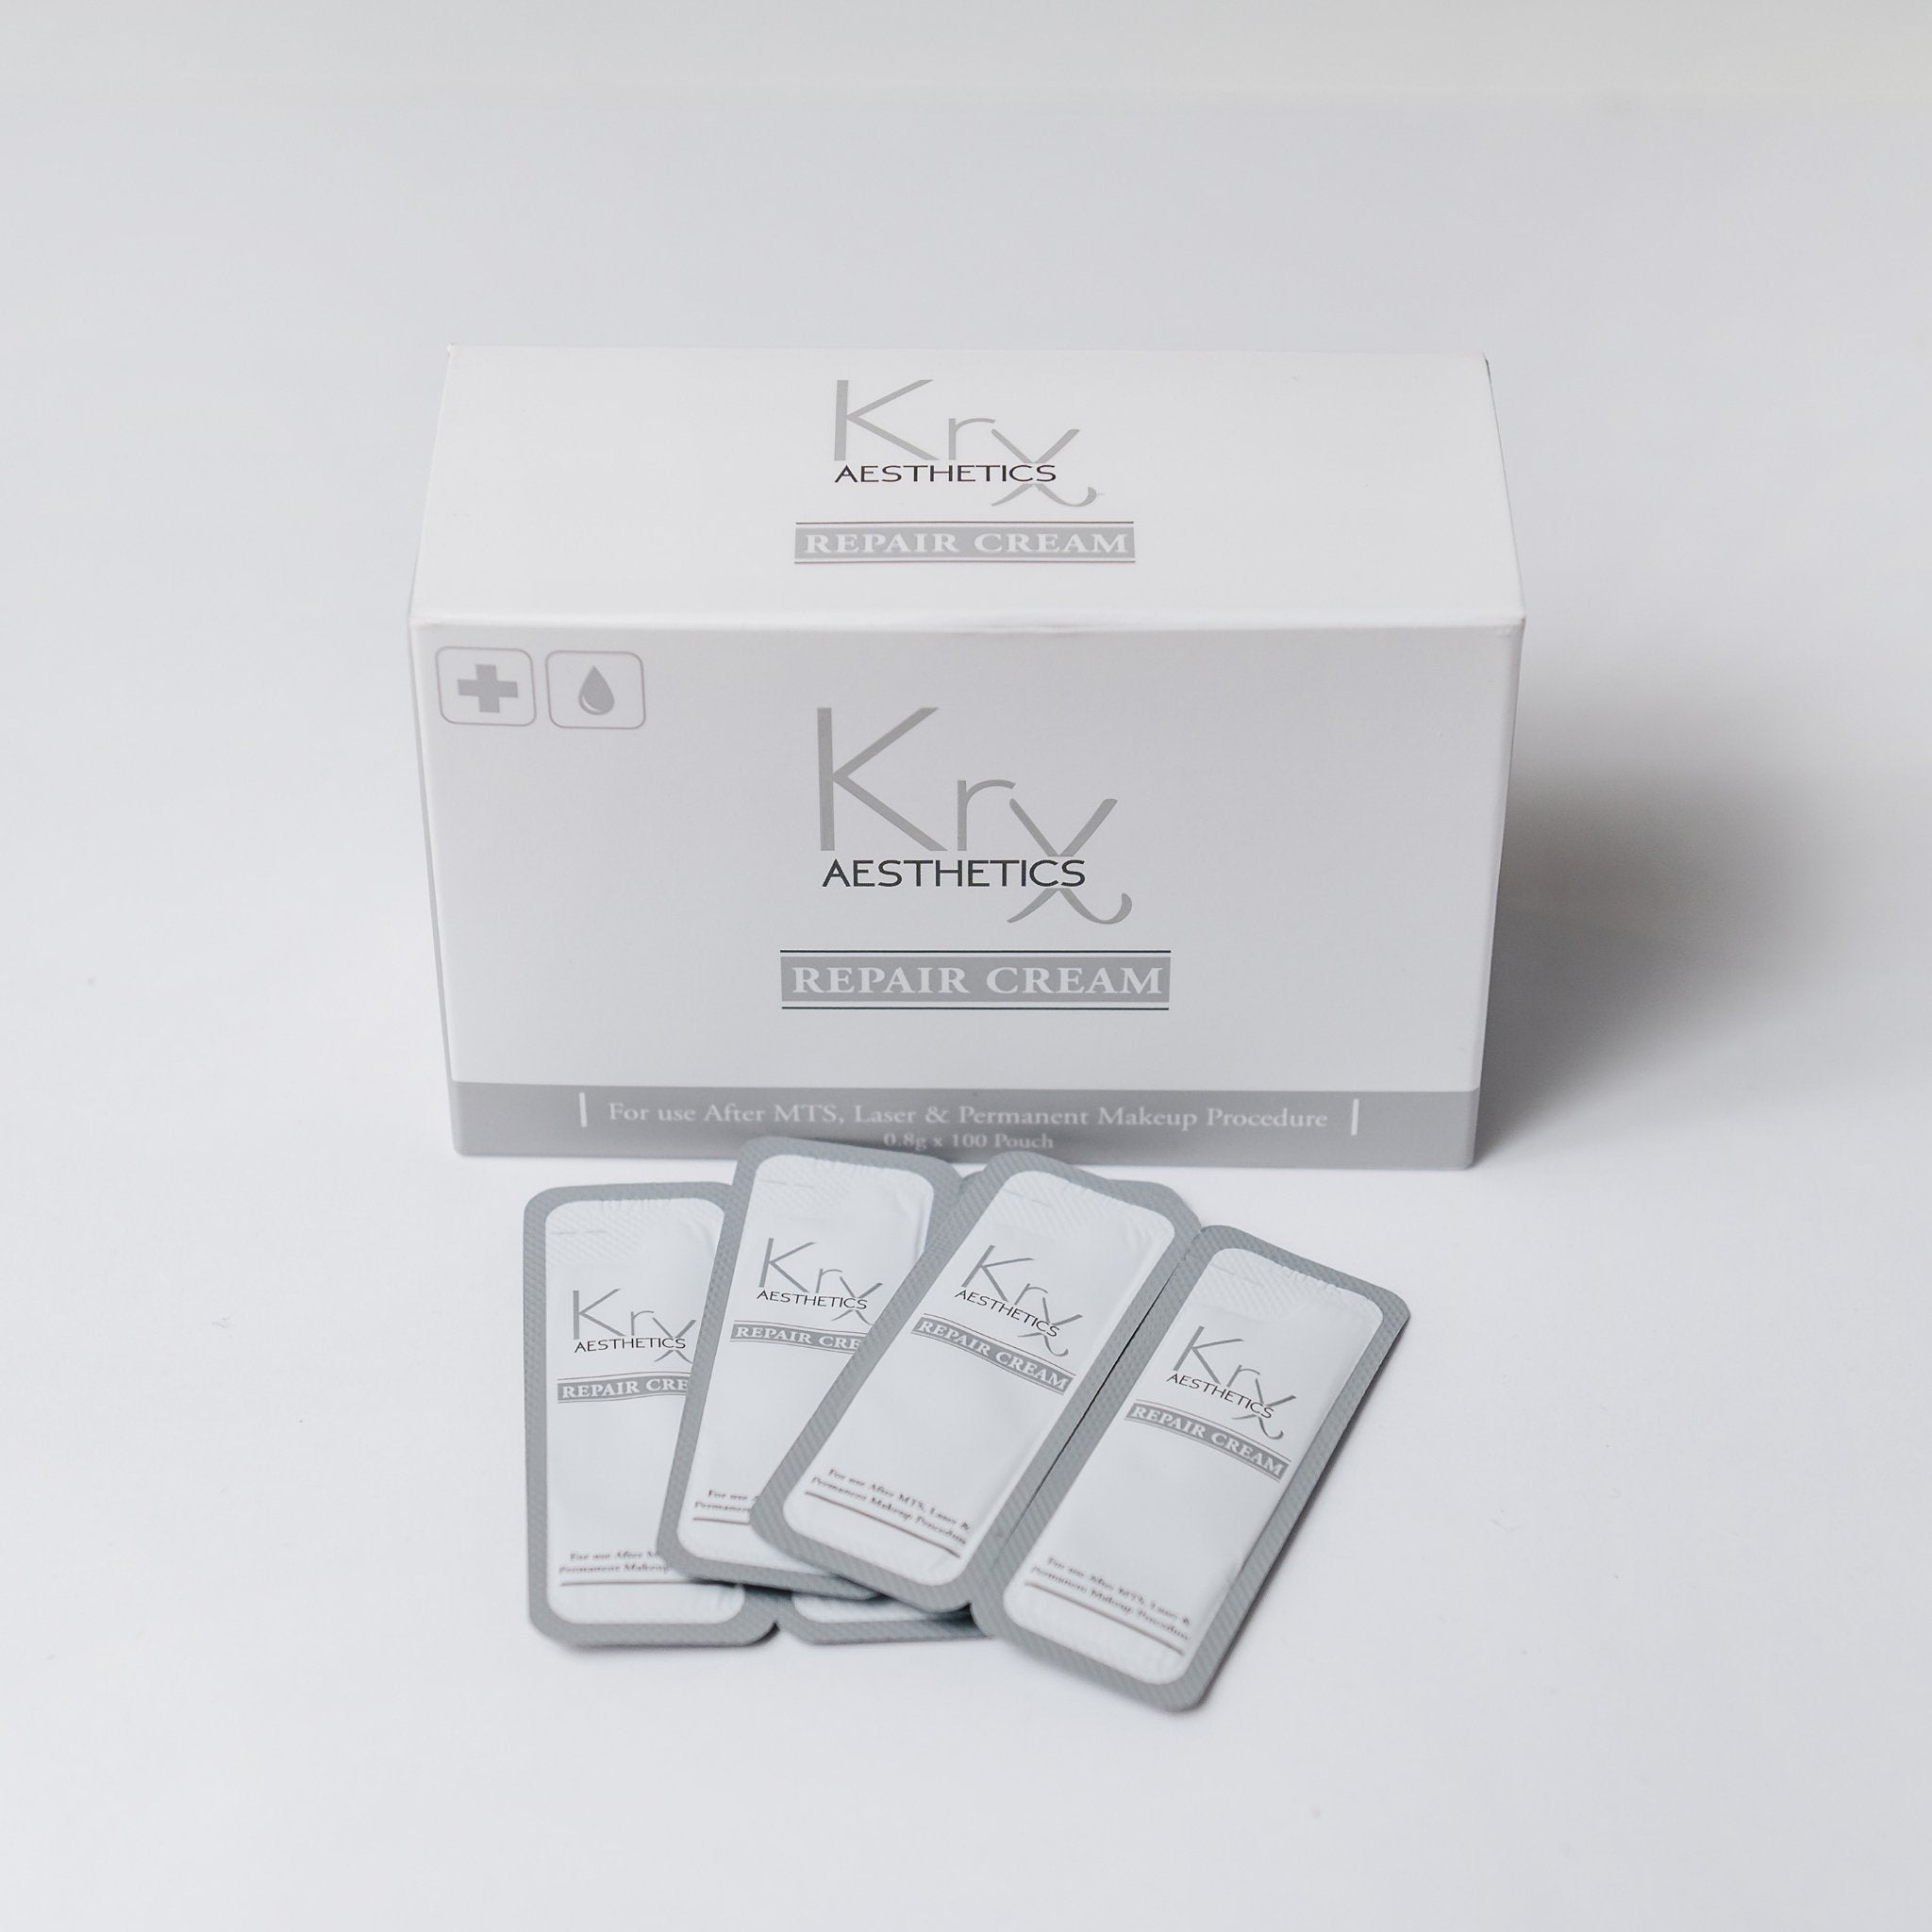 KrX Repair Cream – by Kin Aesthetics